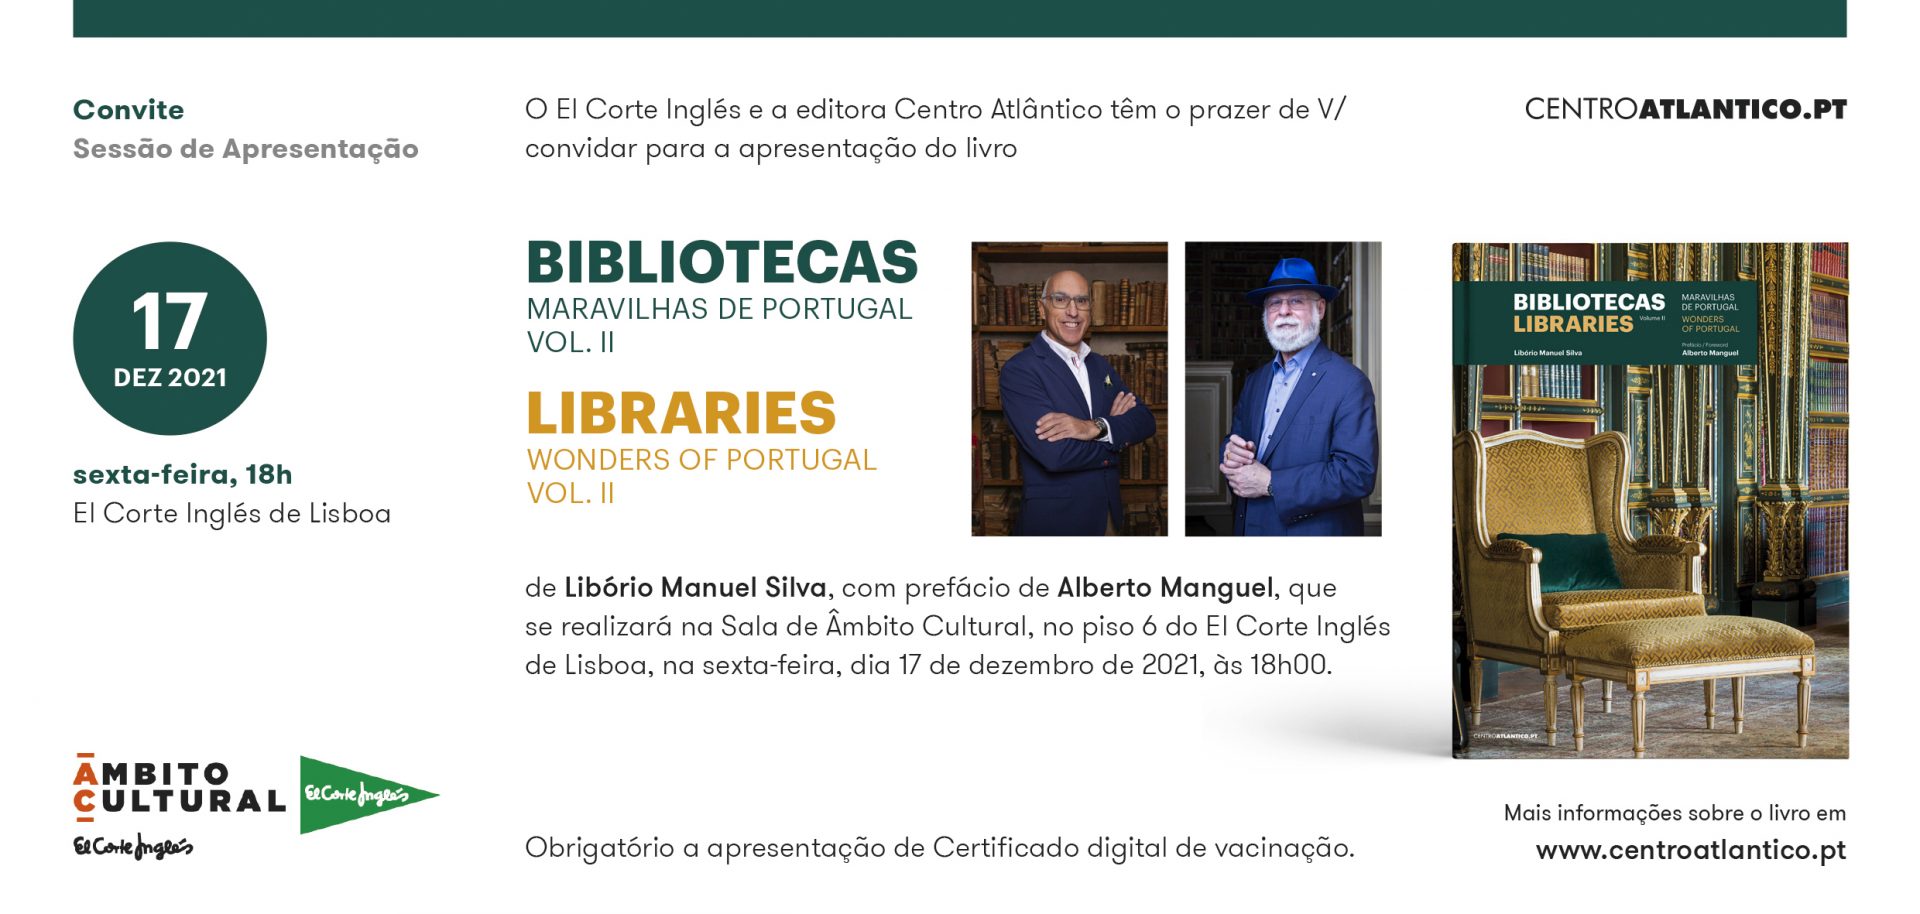 bibliotecas-maravilhas-de-portugal-libraries-wonders-of-portugal